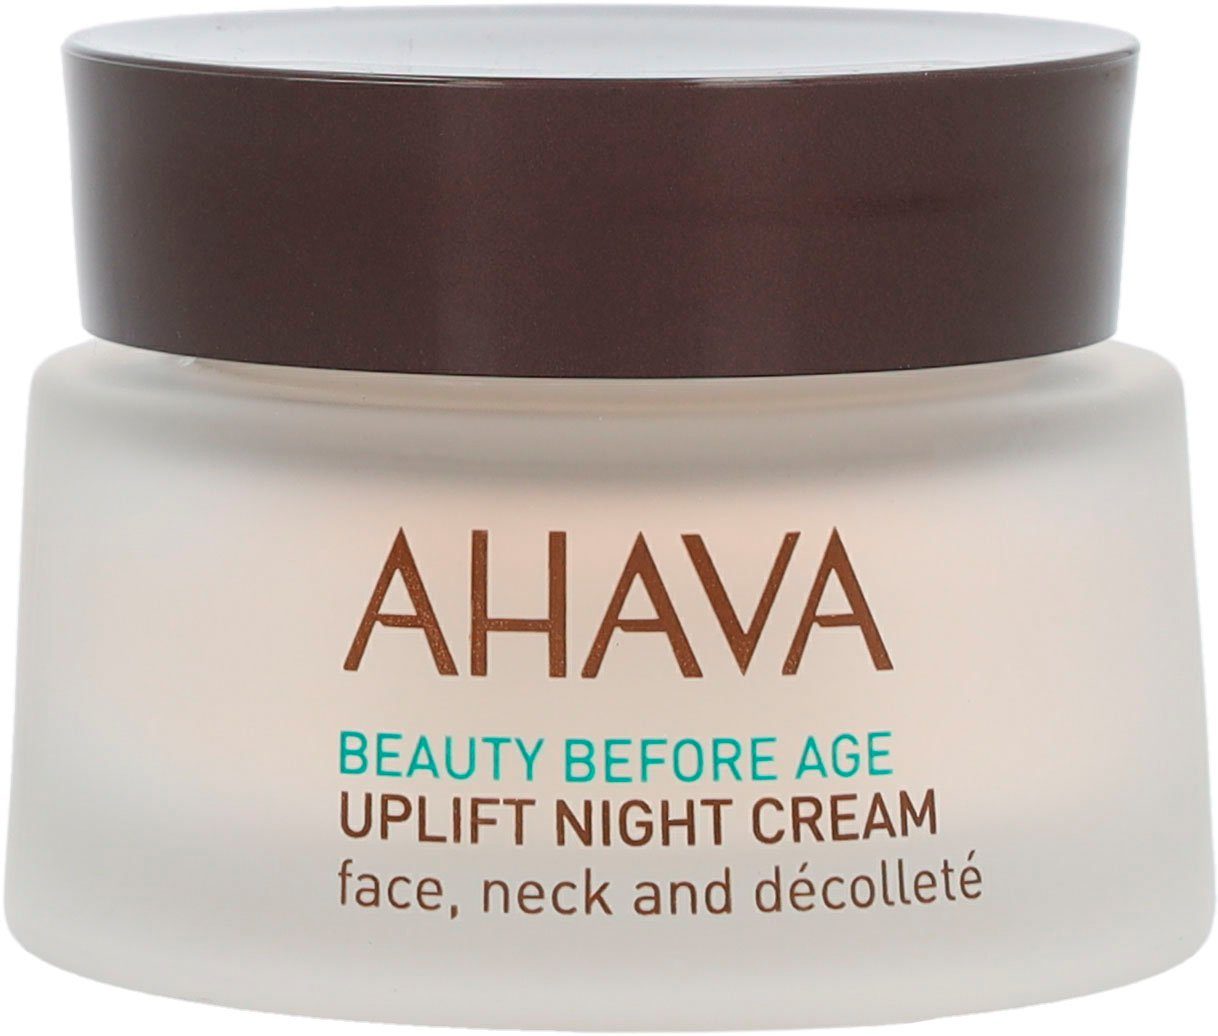 Nachtcreme Beauty Uplift AHAVA Night Age Cream Before